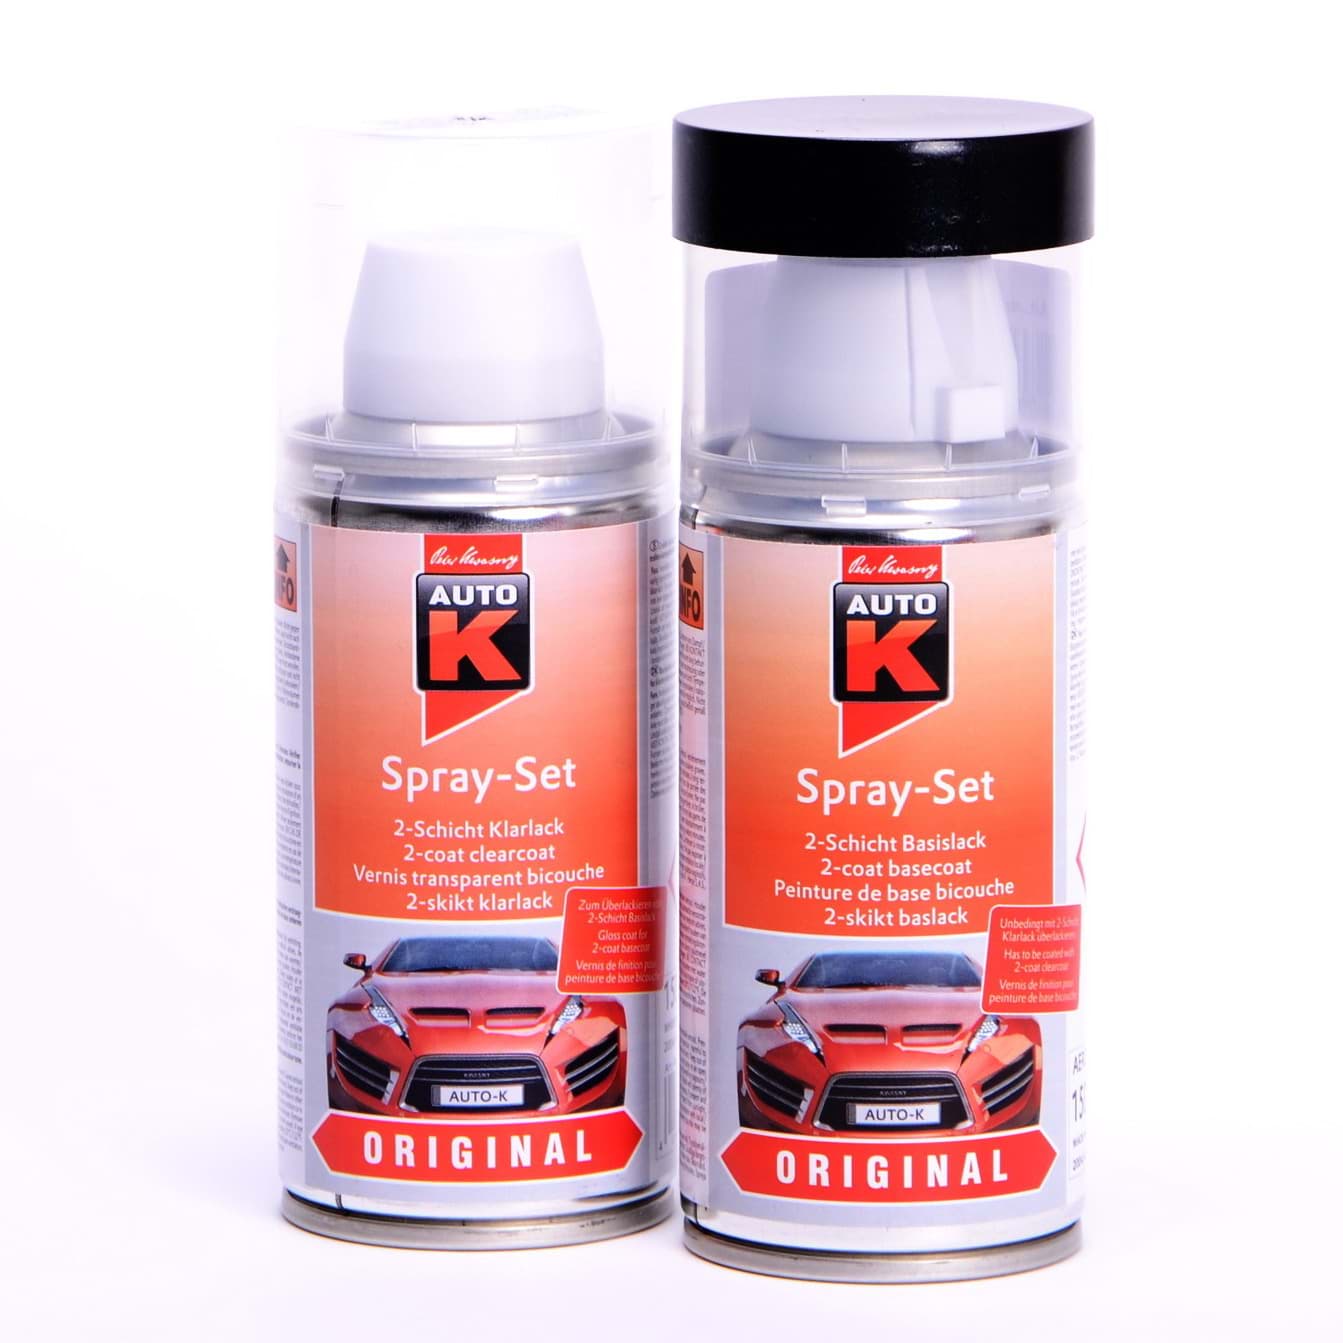 Auto-K Spray-Set Autolack für Opel 545 Bordeauxrot met 21340 resmi